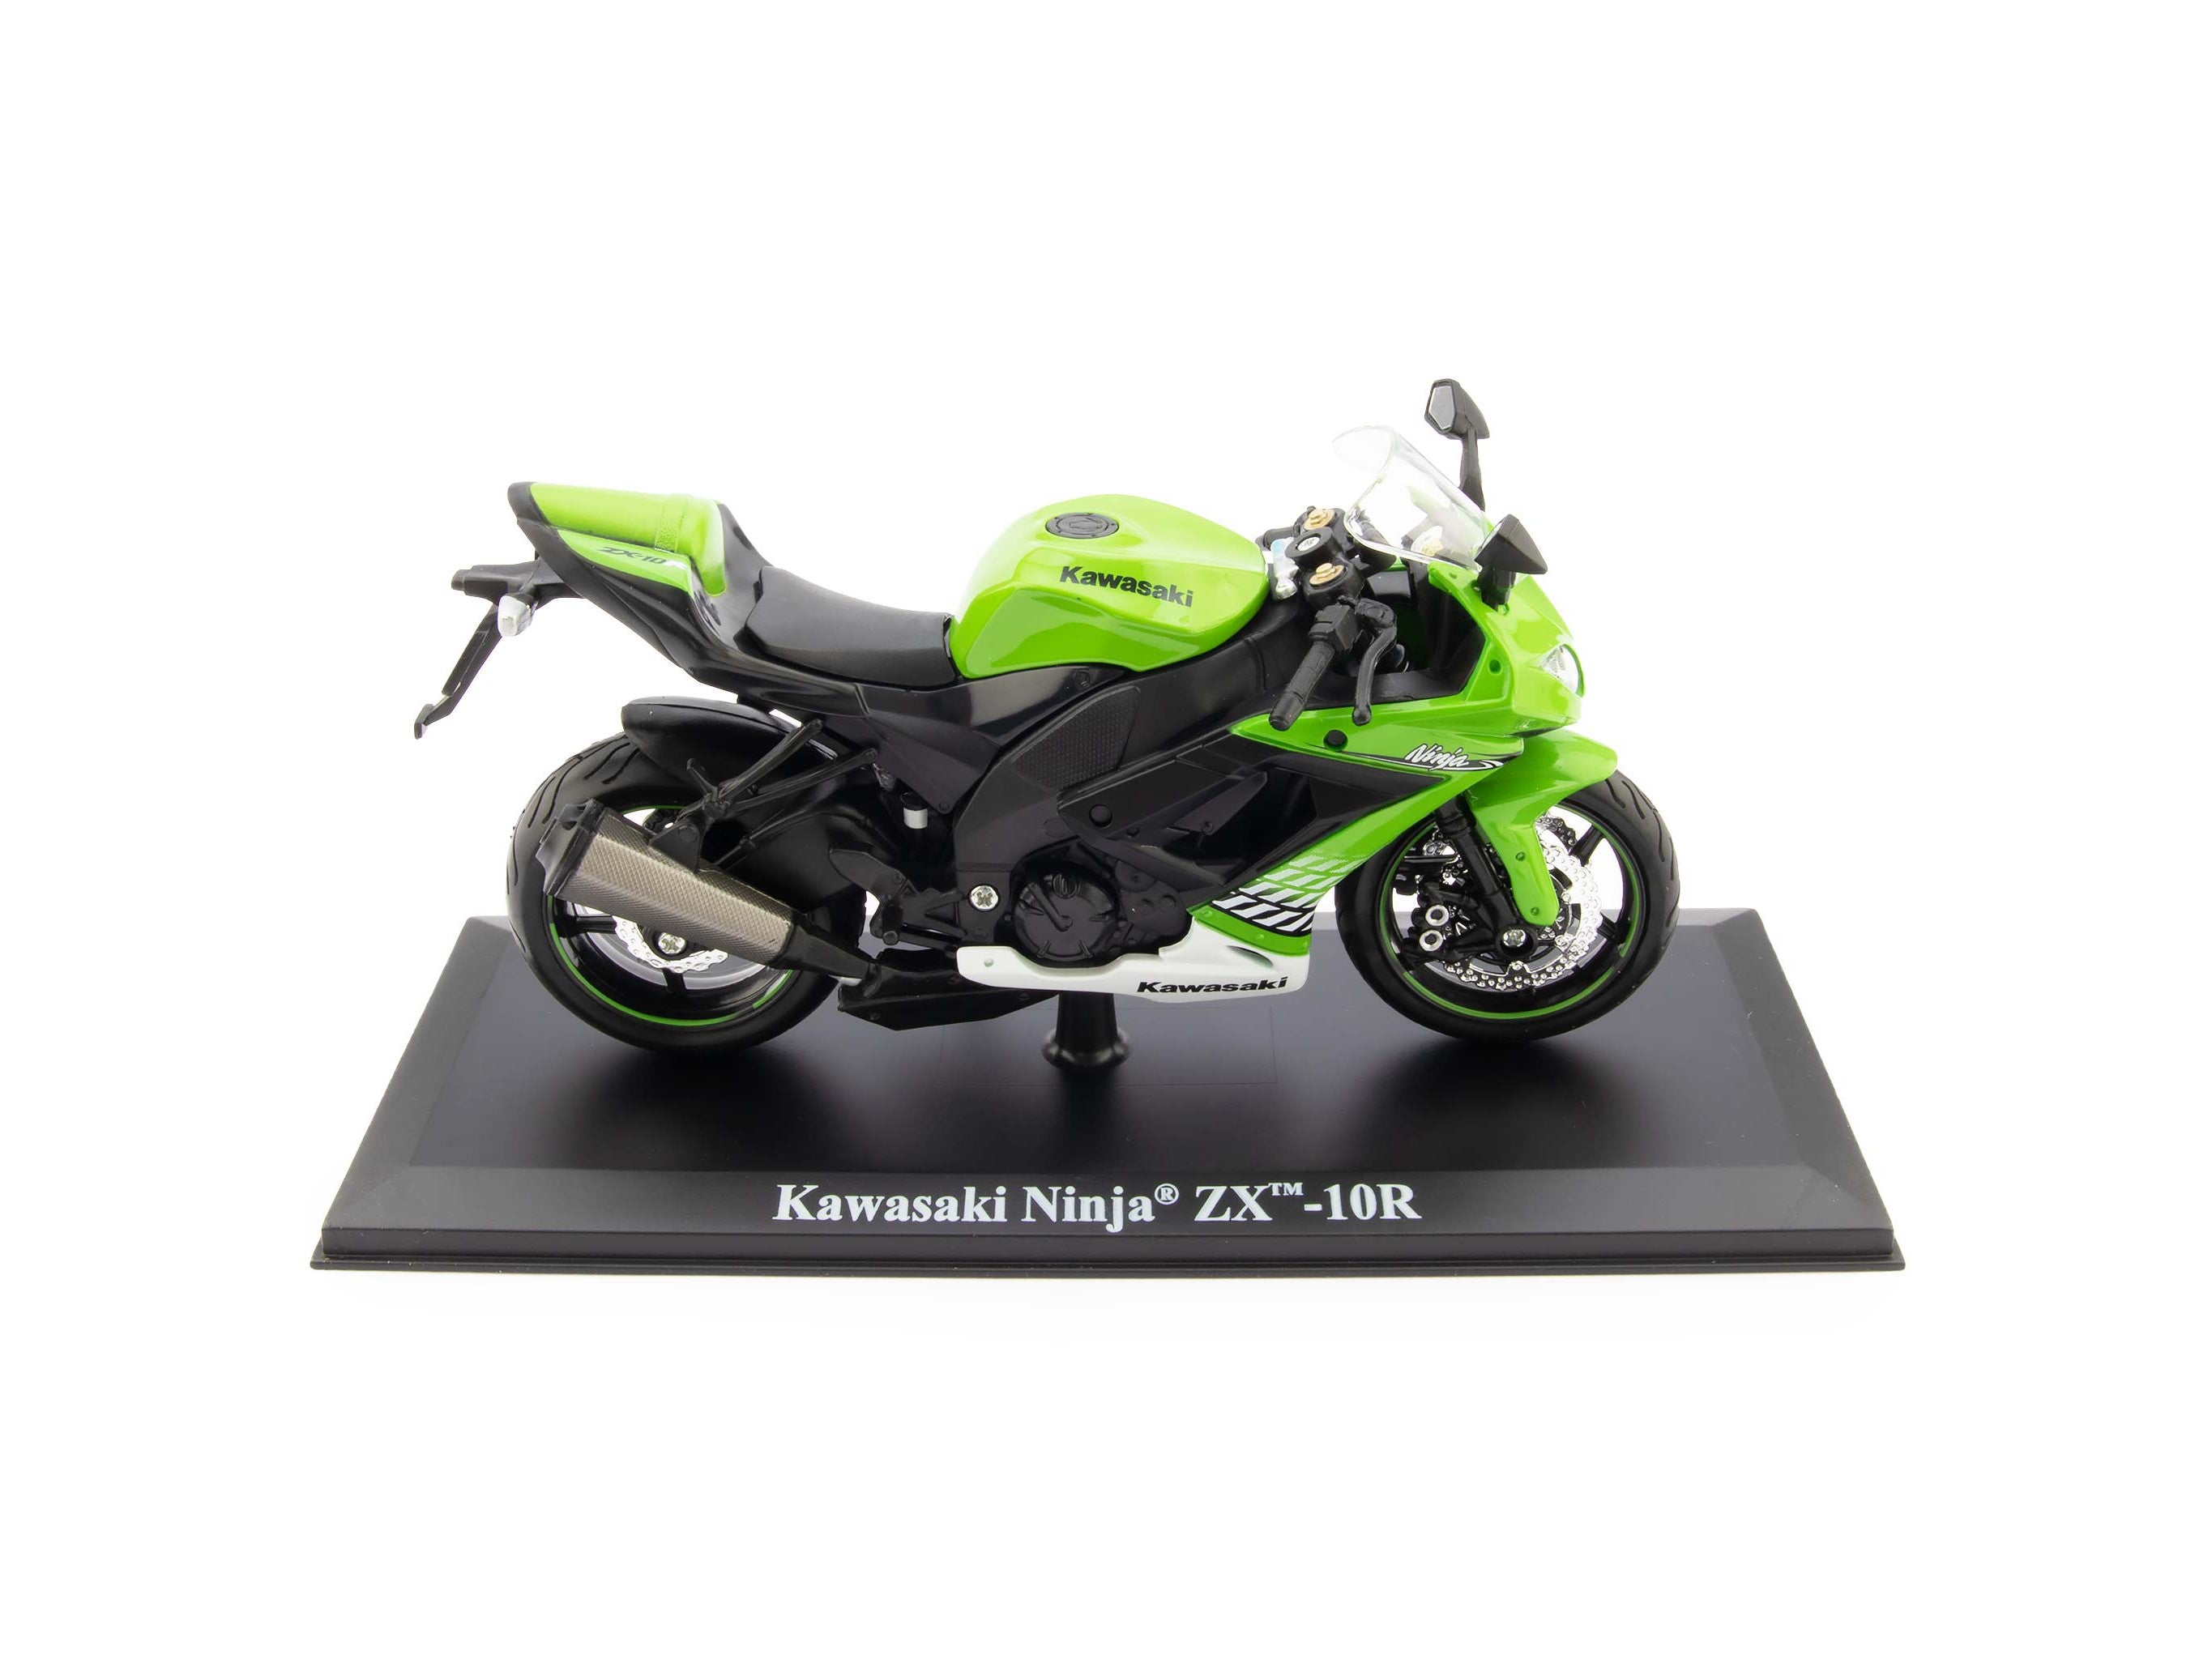 Kawasaki Ninja ZX-10R 2010 green - 1:12 Scale